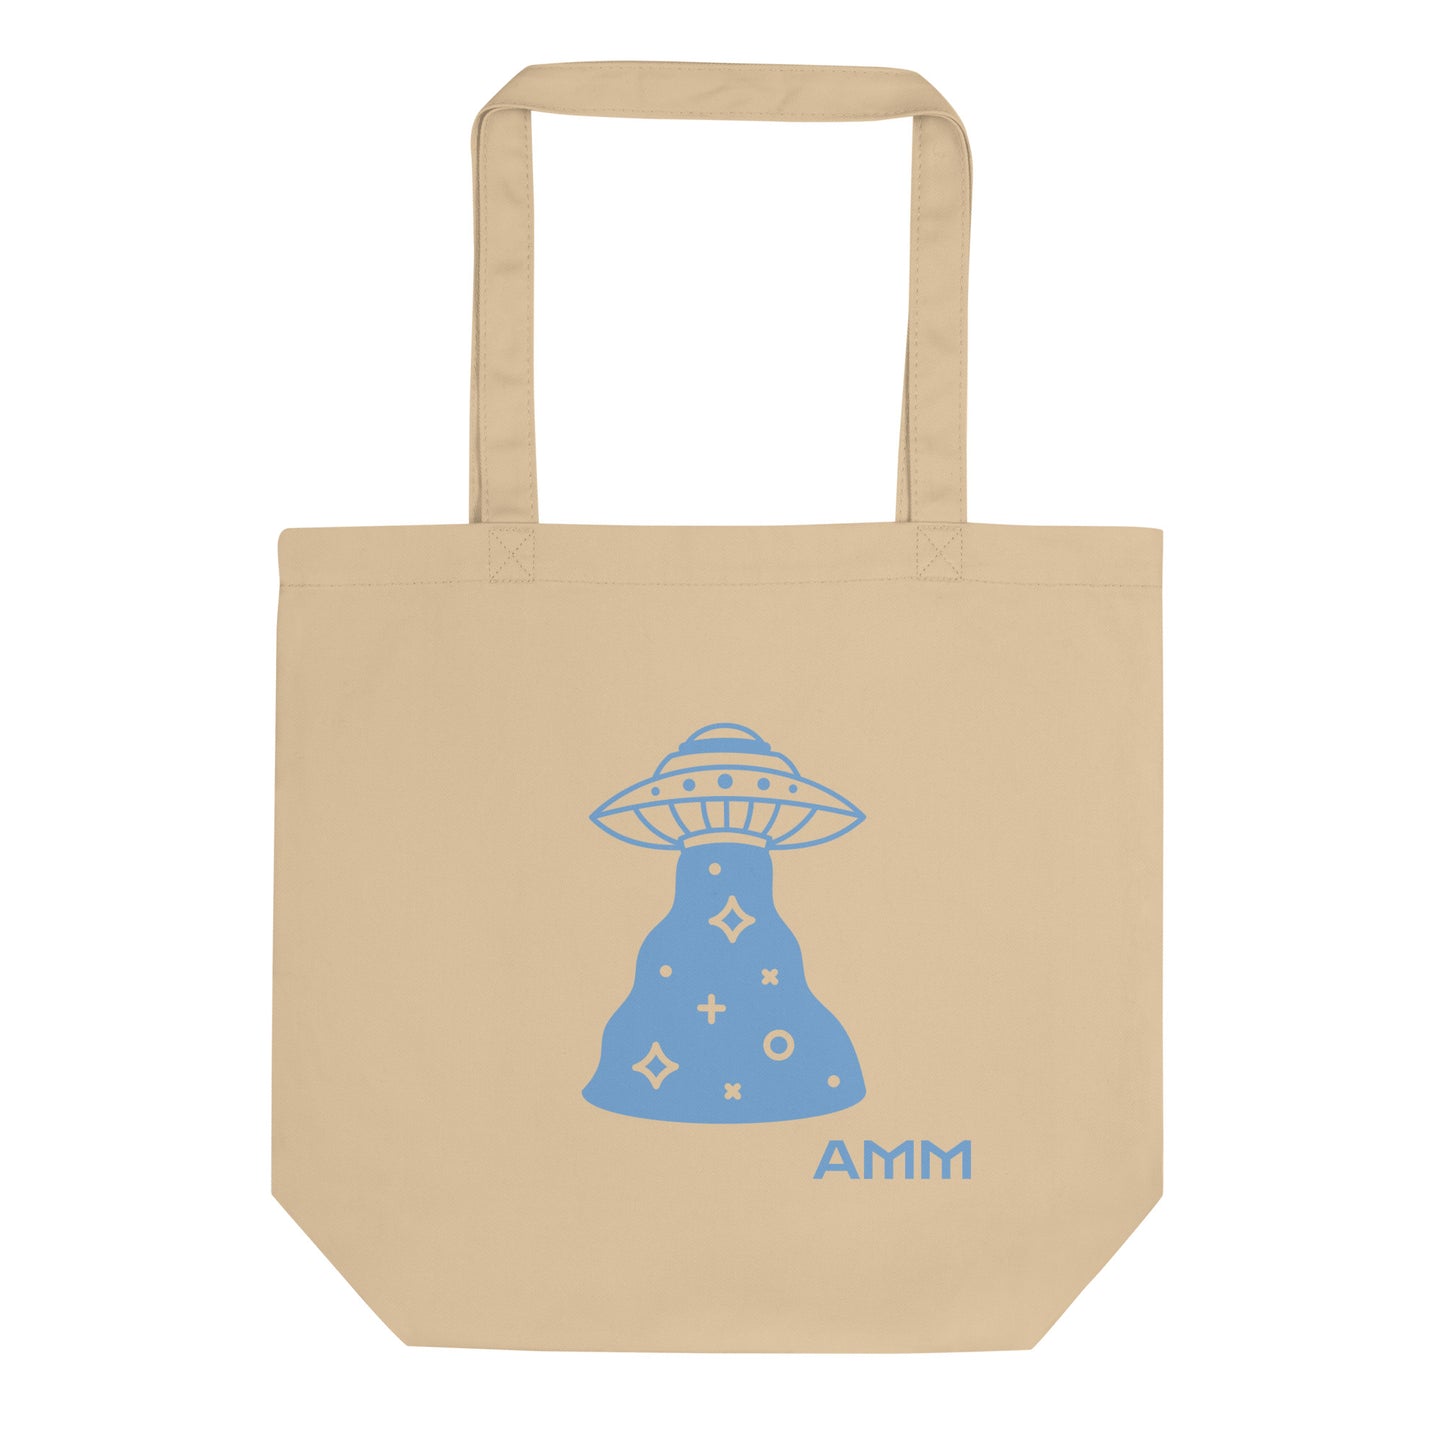 UFO Love&Light Eco Tote Bag